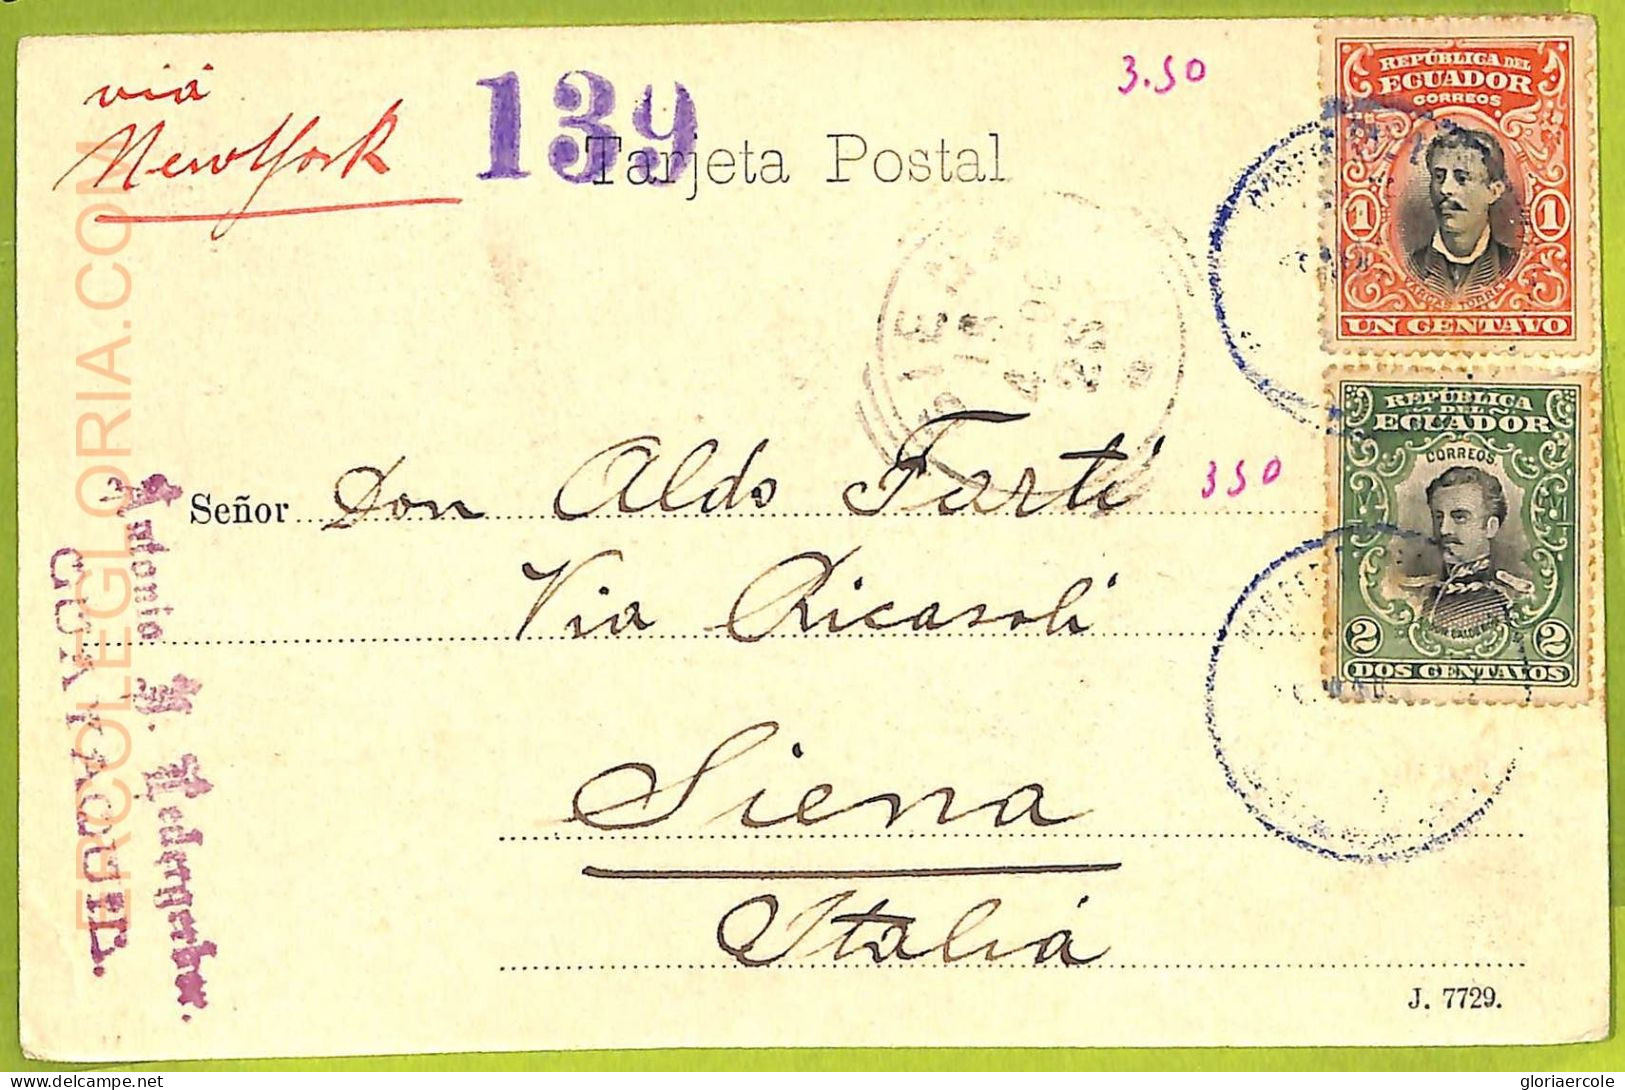 Af2409 - ECUADOR - Vintage Postcard -  Guayaquil - 1902 - Ecuador